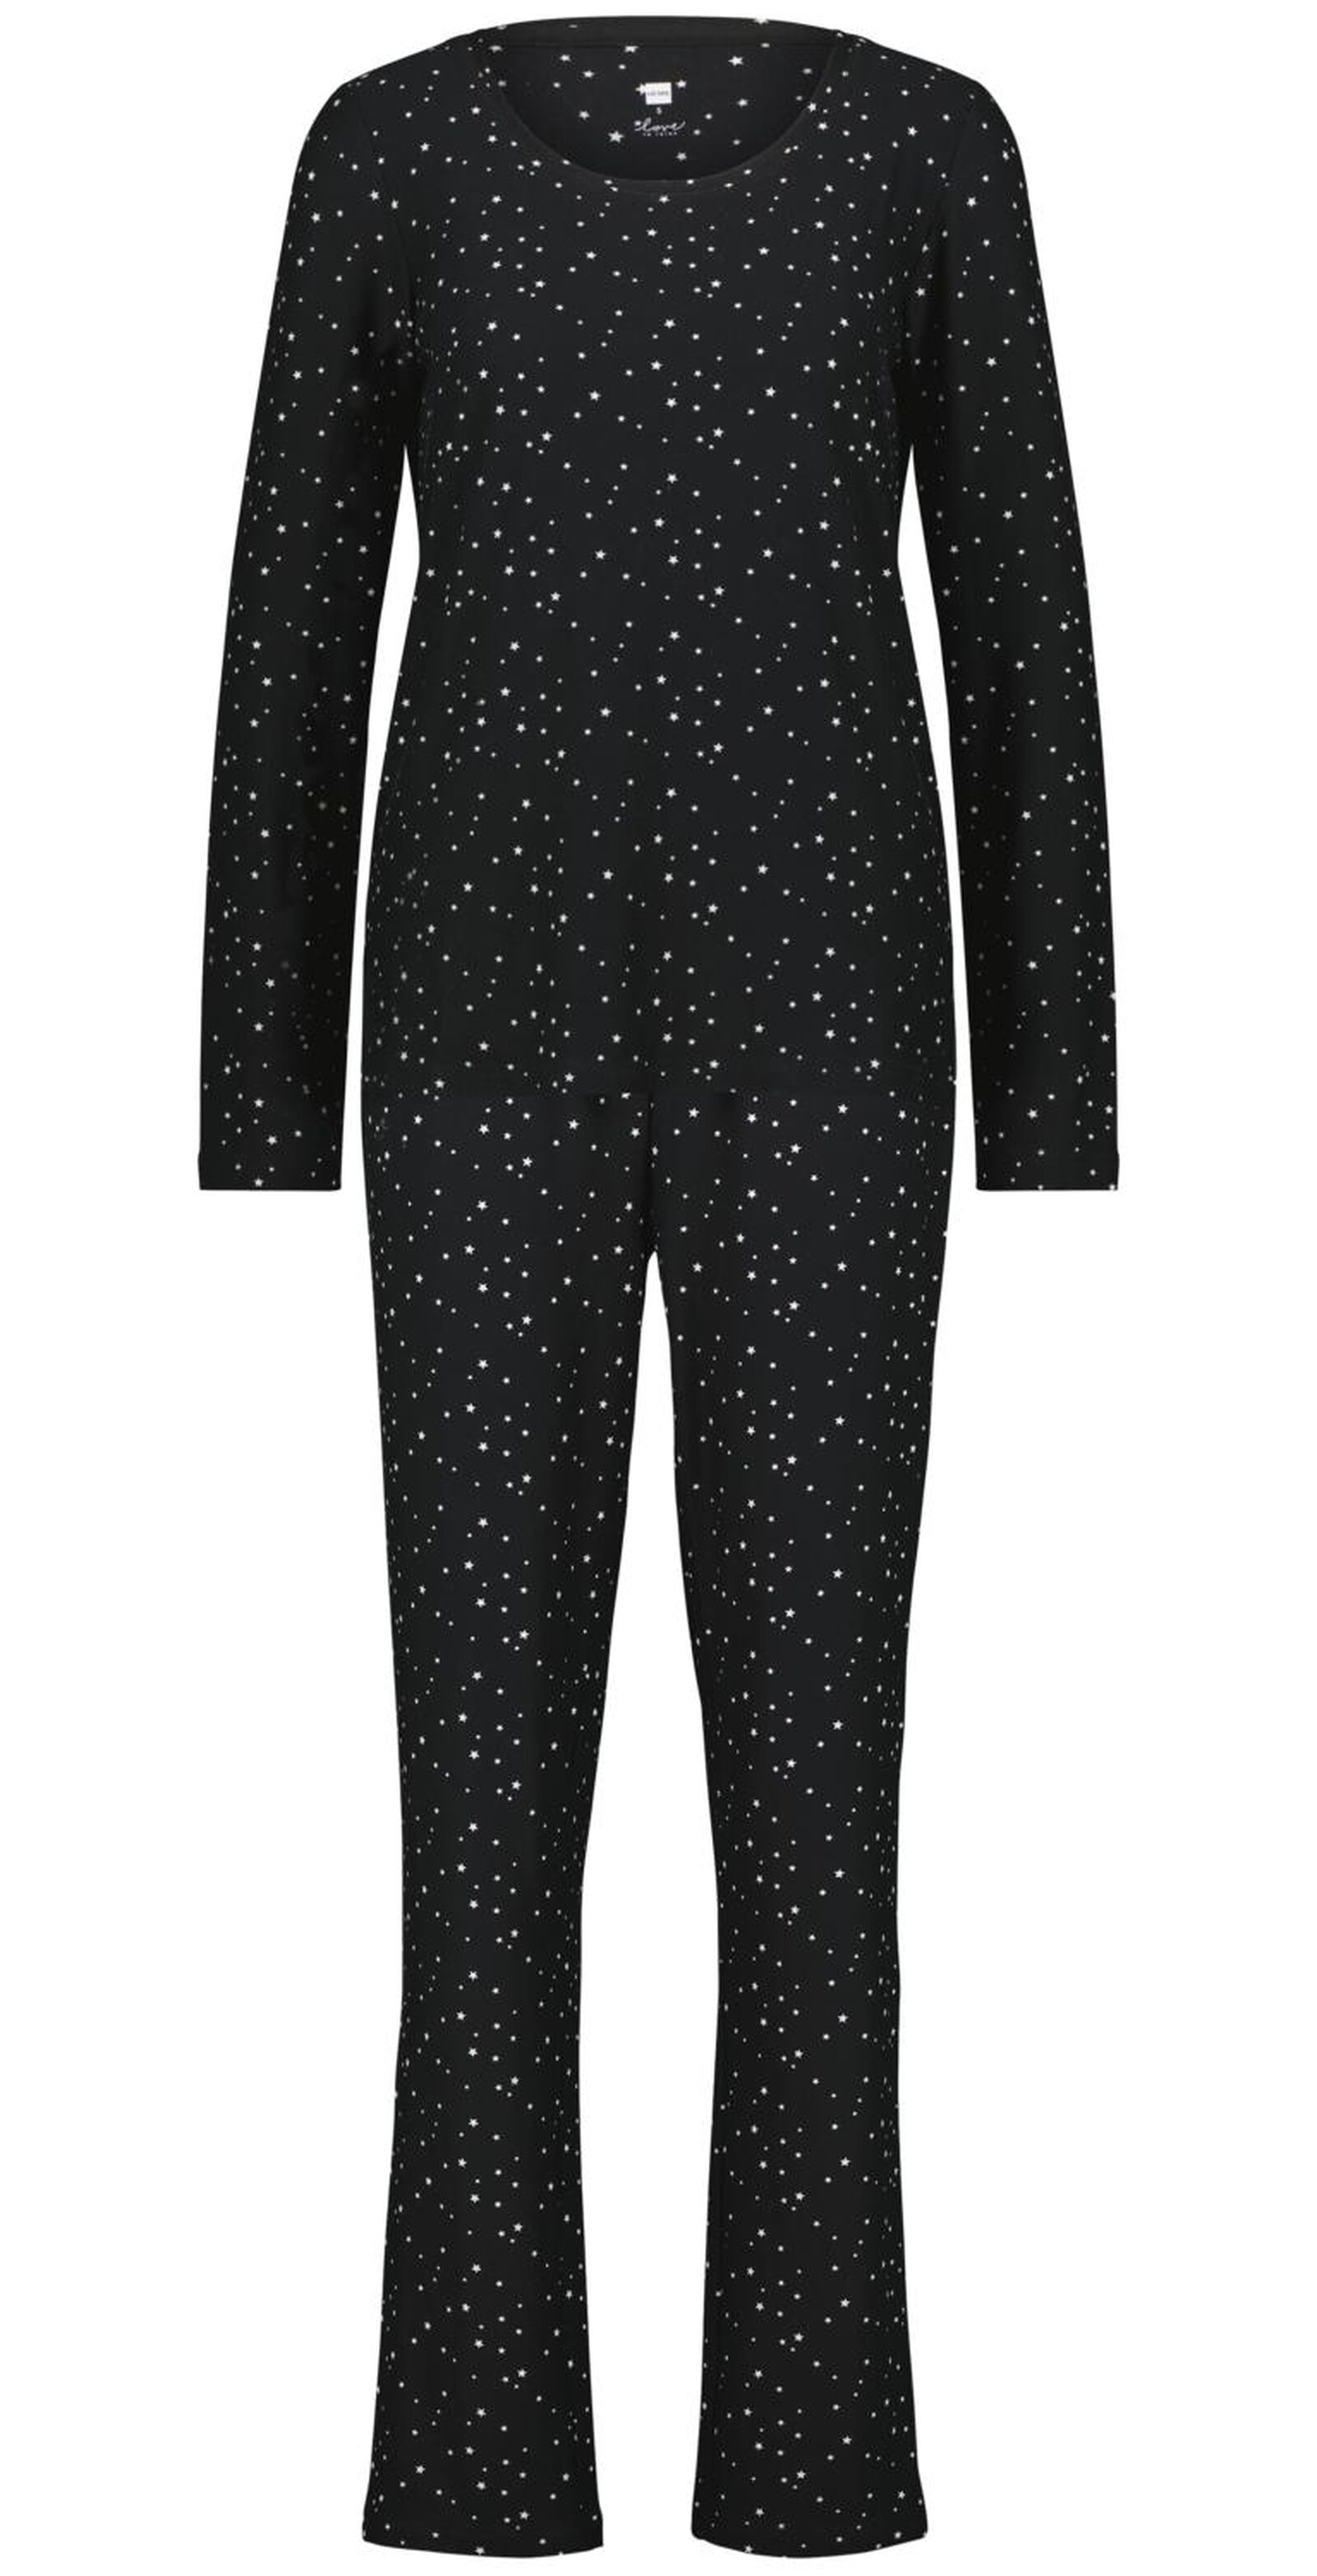 damespyjama sterren zwart - 1000024429 - HEMA